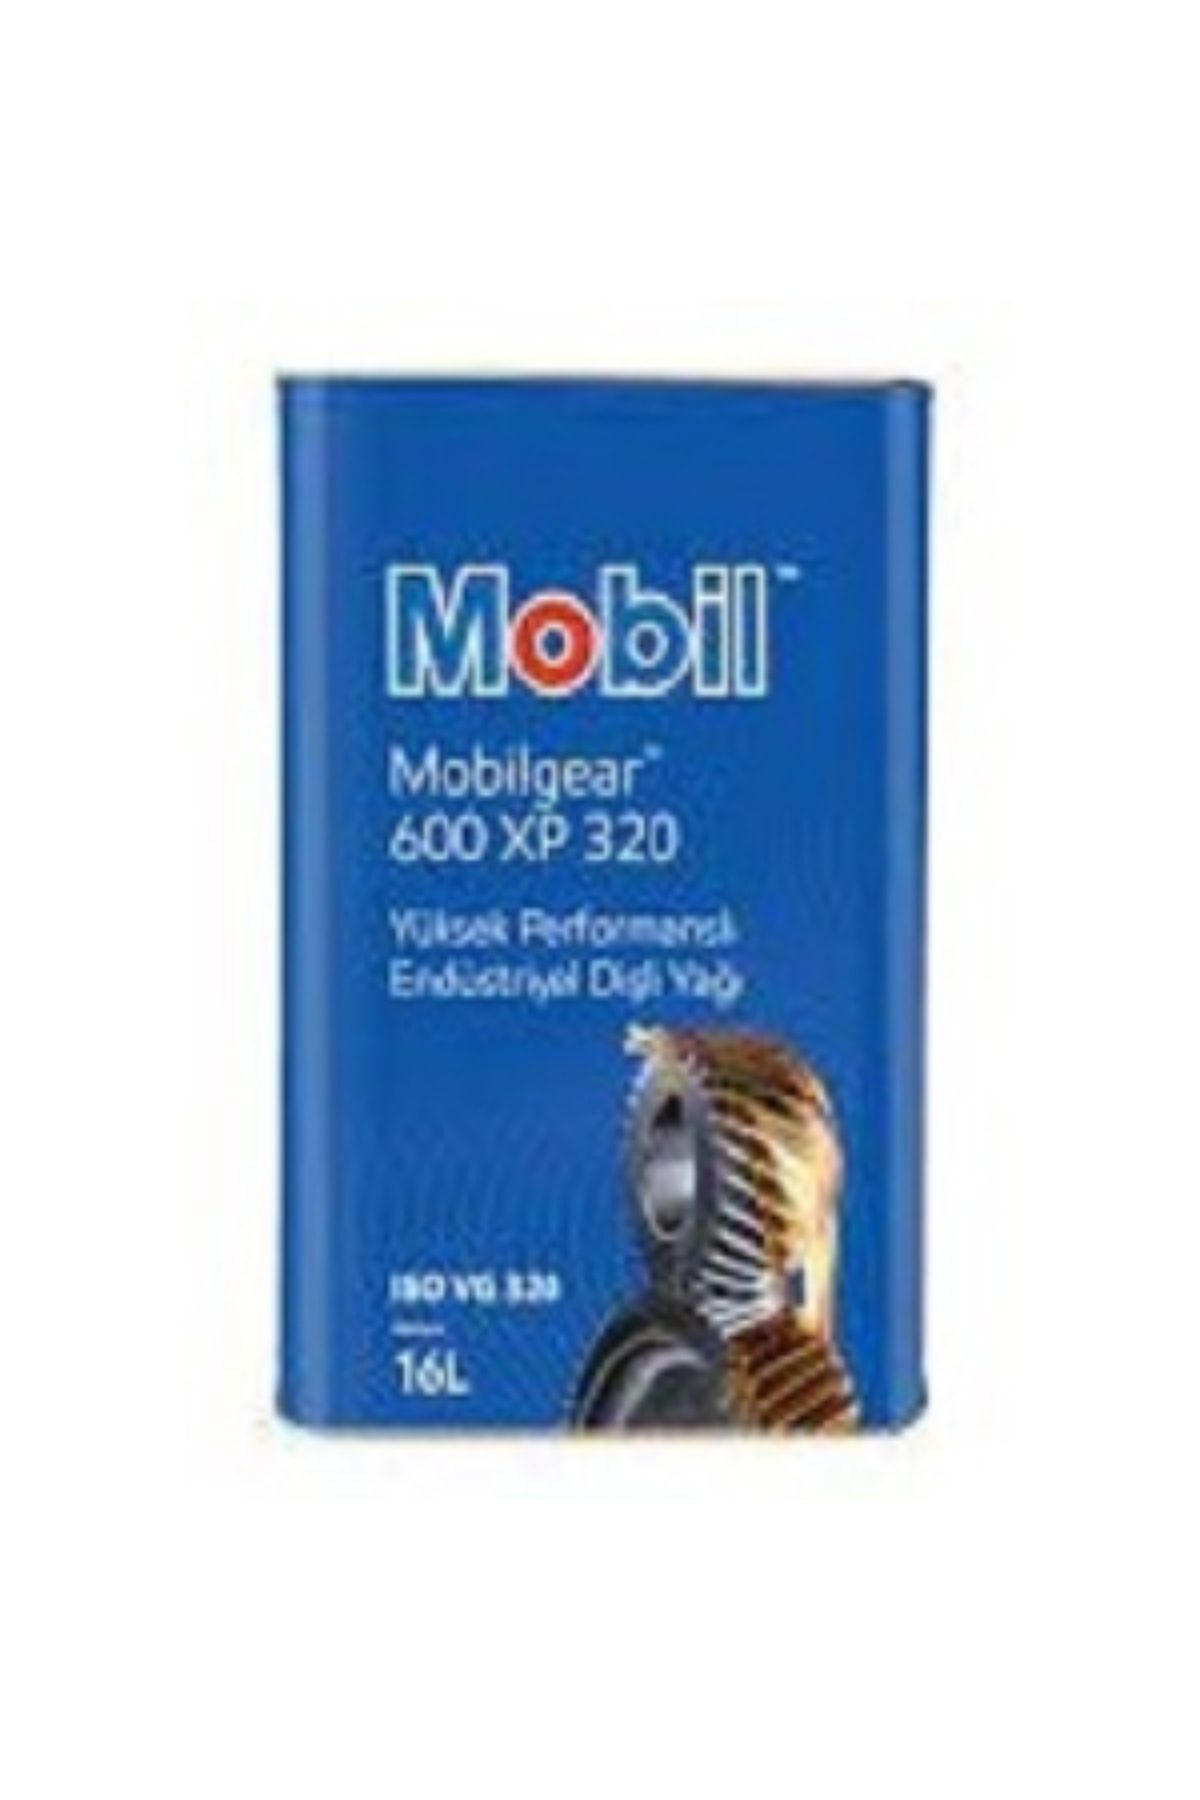 Mobil MobilGear 600 XP 320 - 16 Litre Endüstriyel Dişli Yağı